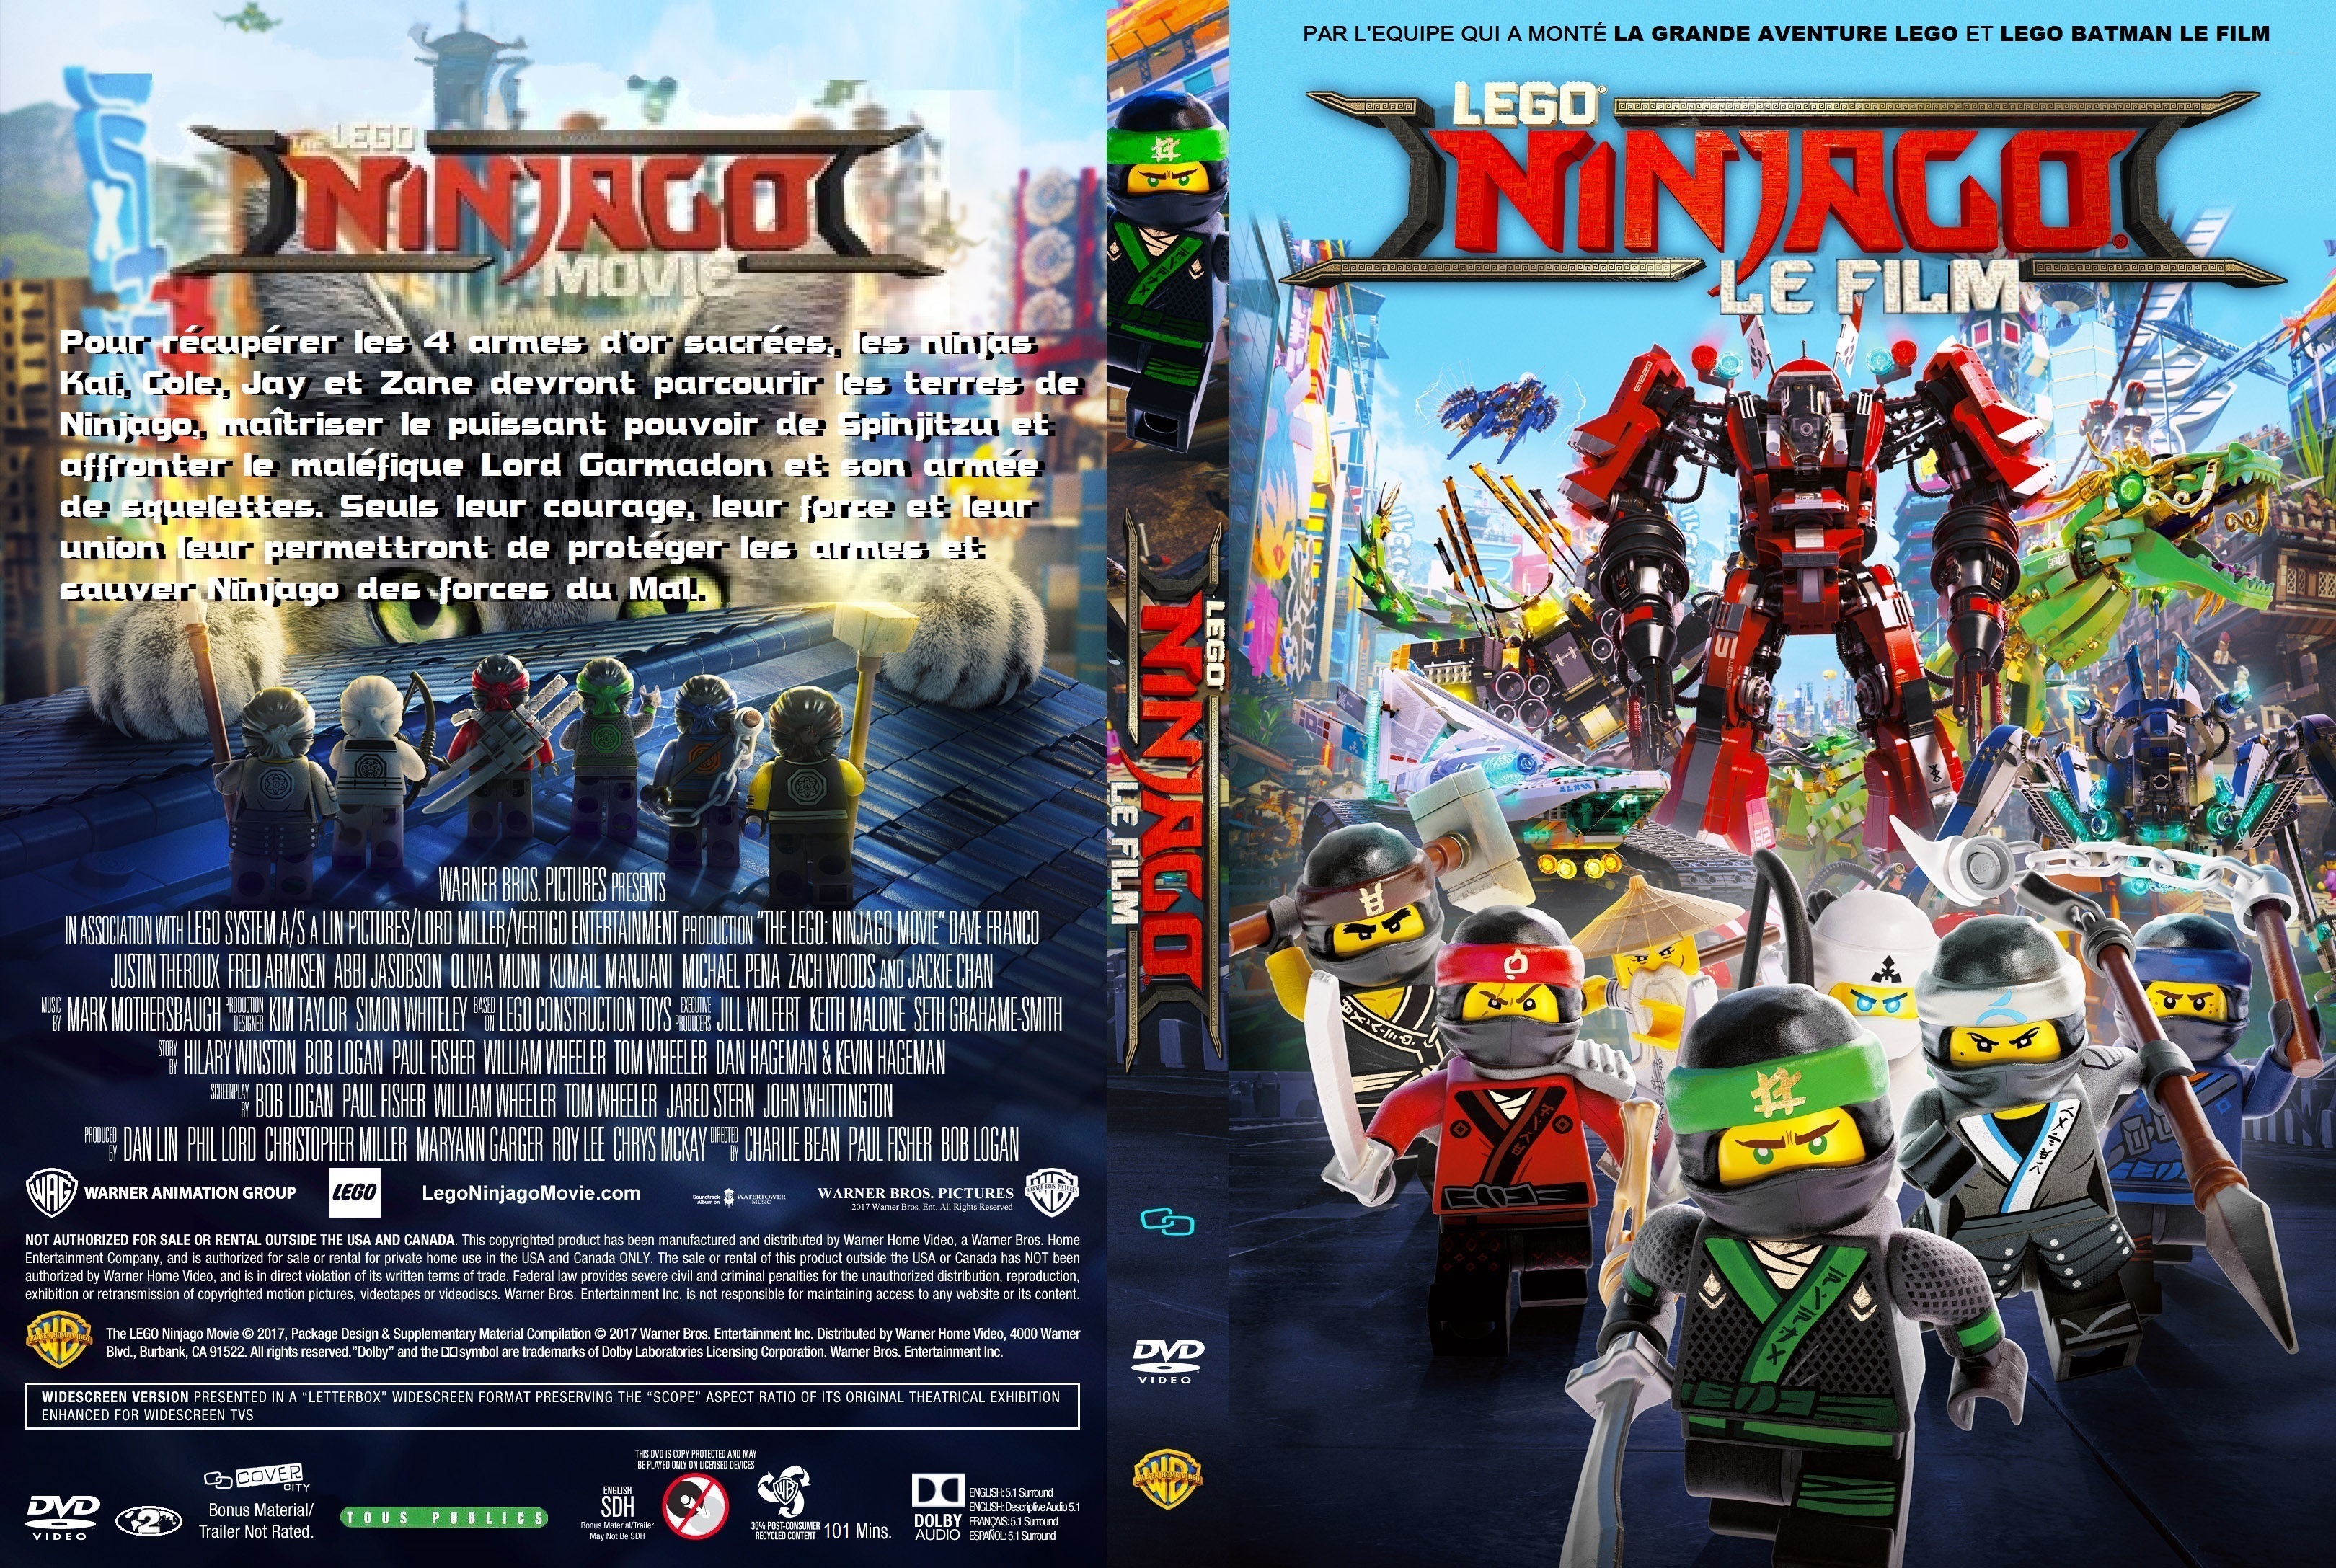 Jaquette DVD Lego Ninjago le film custom